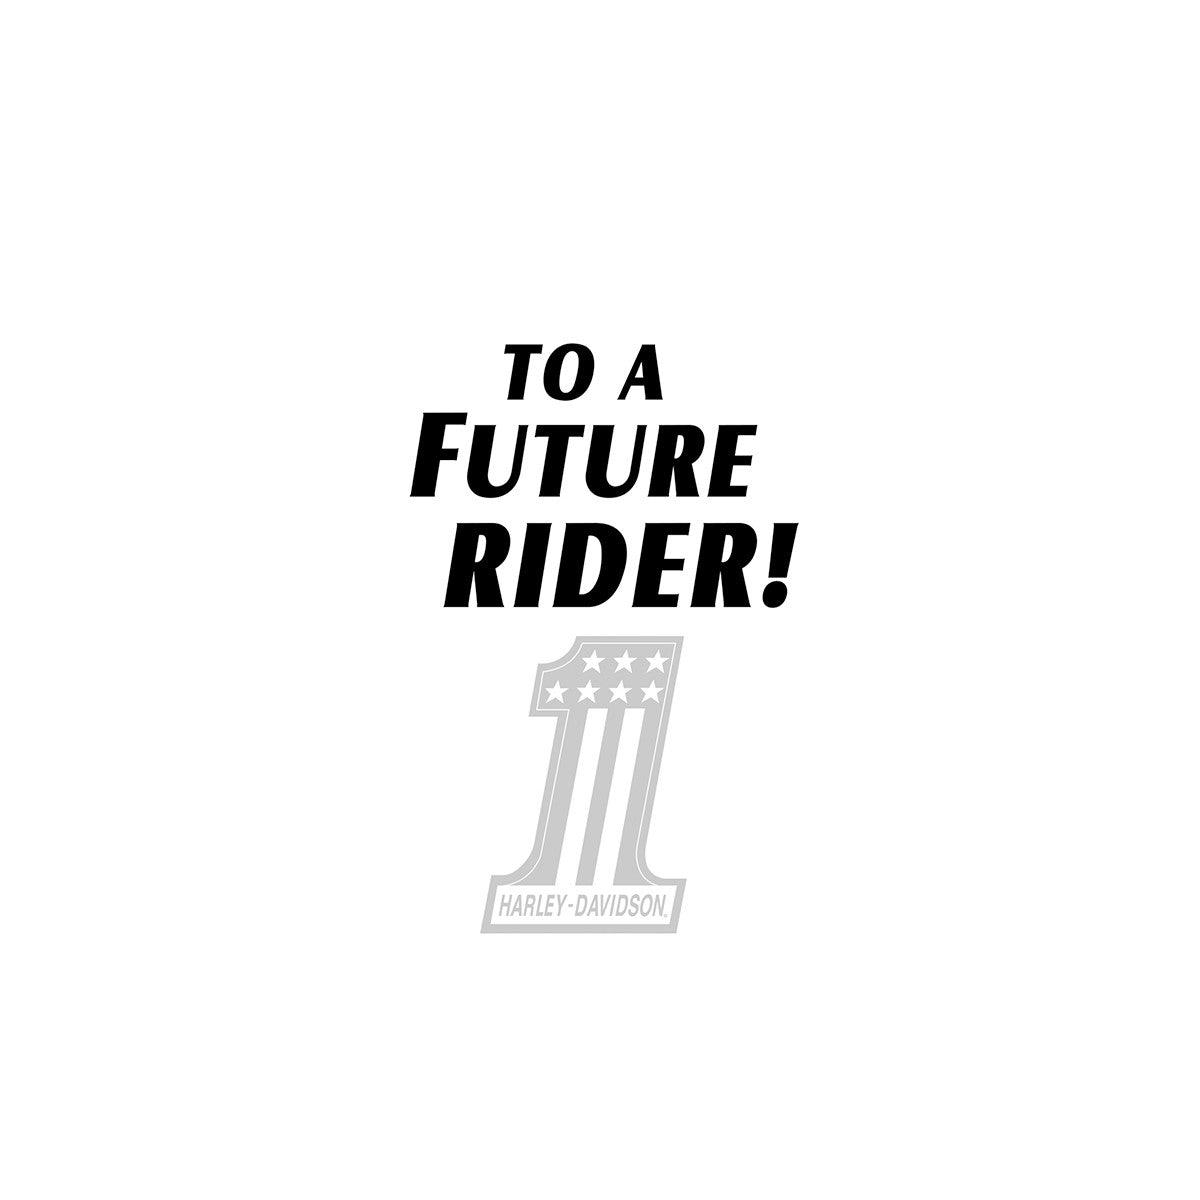 H-D Future Ride/Kid's Birthday Card